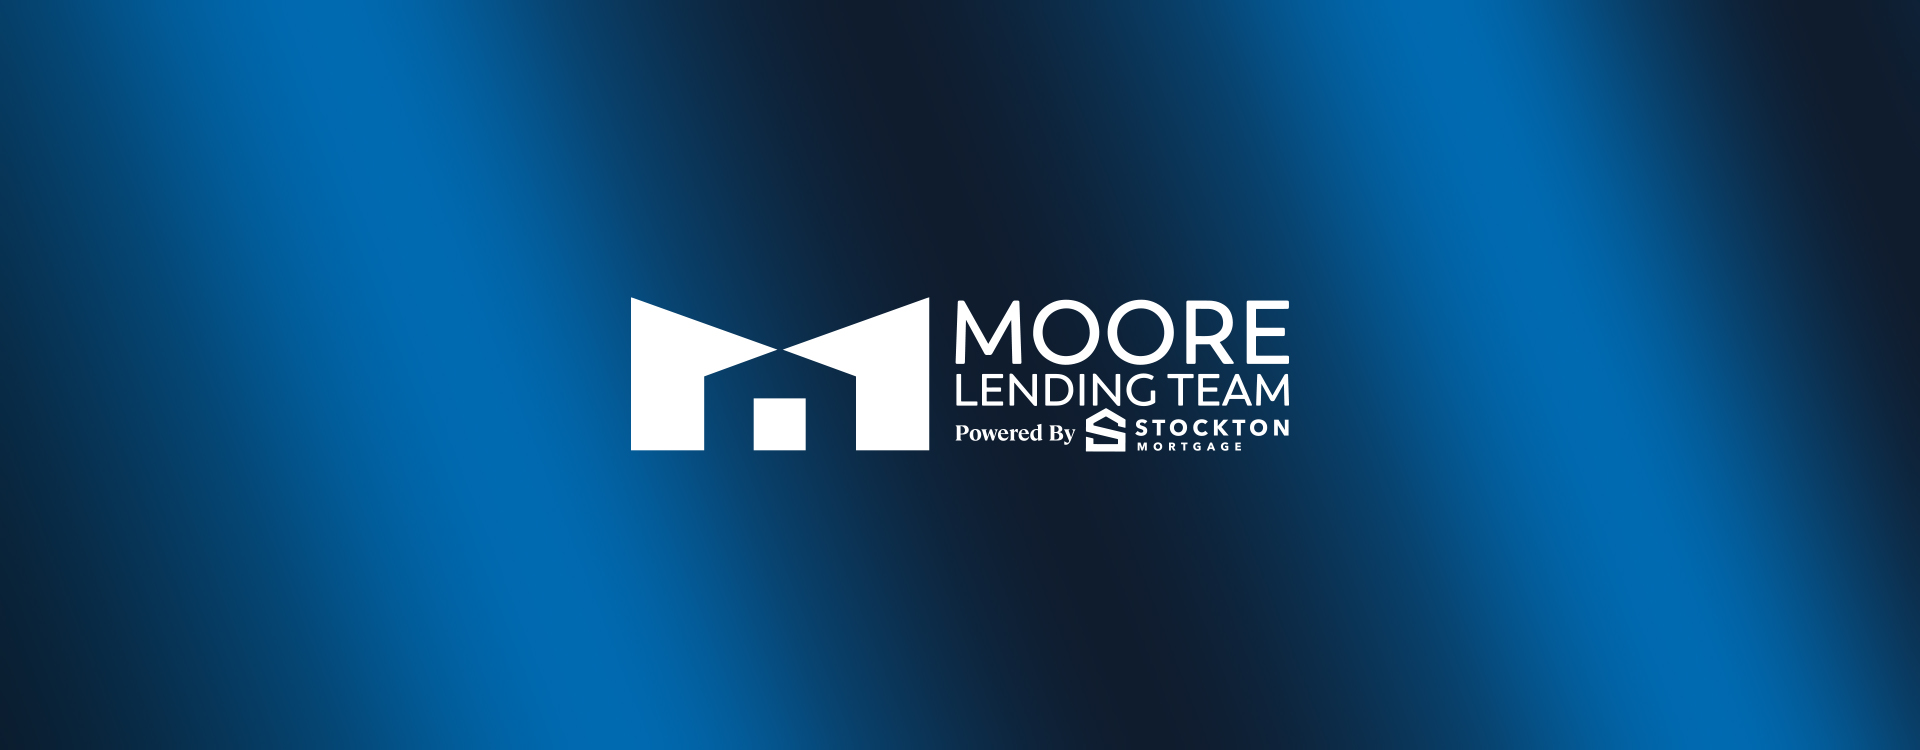 Moore lending team logo on a blue background